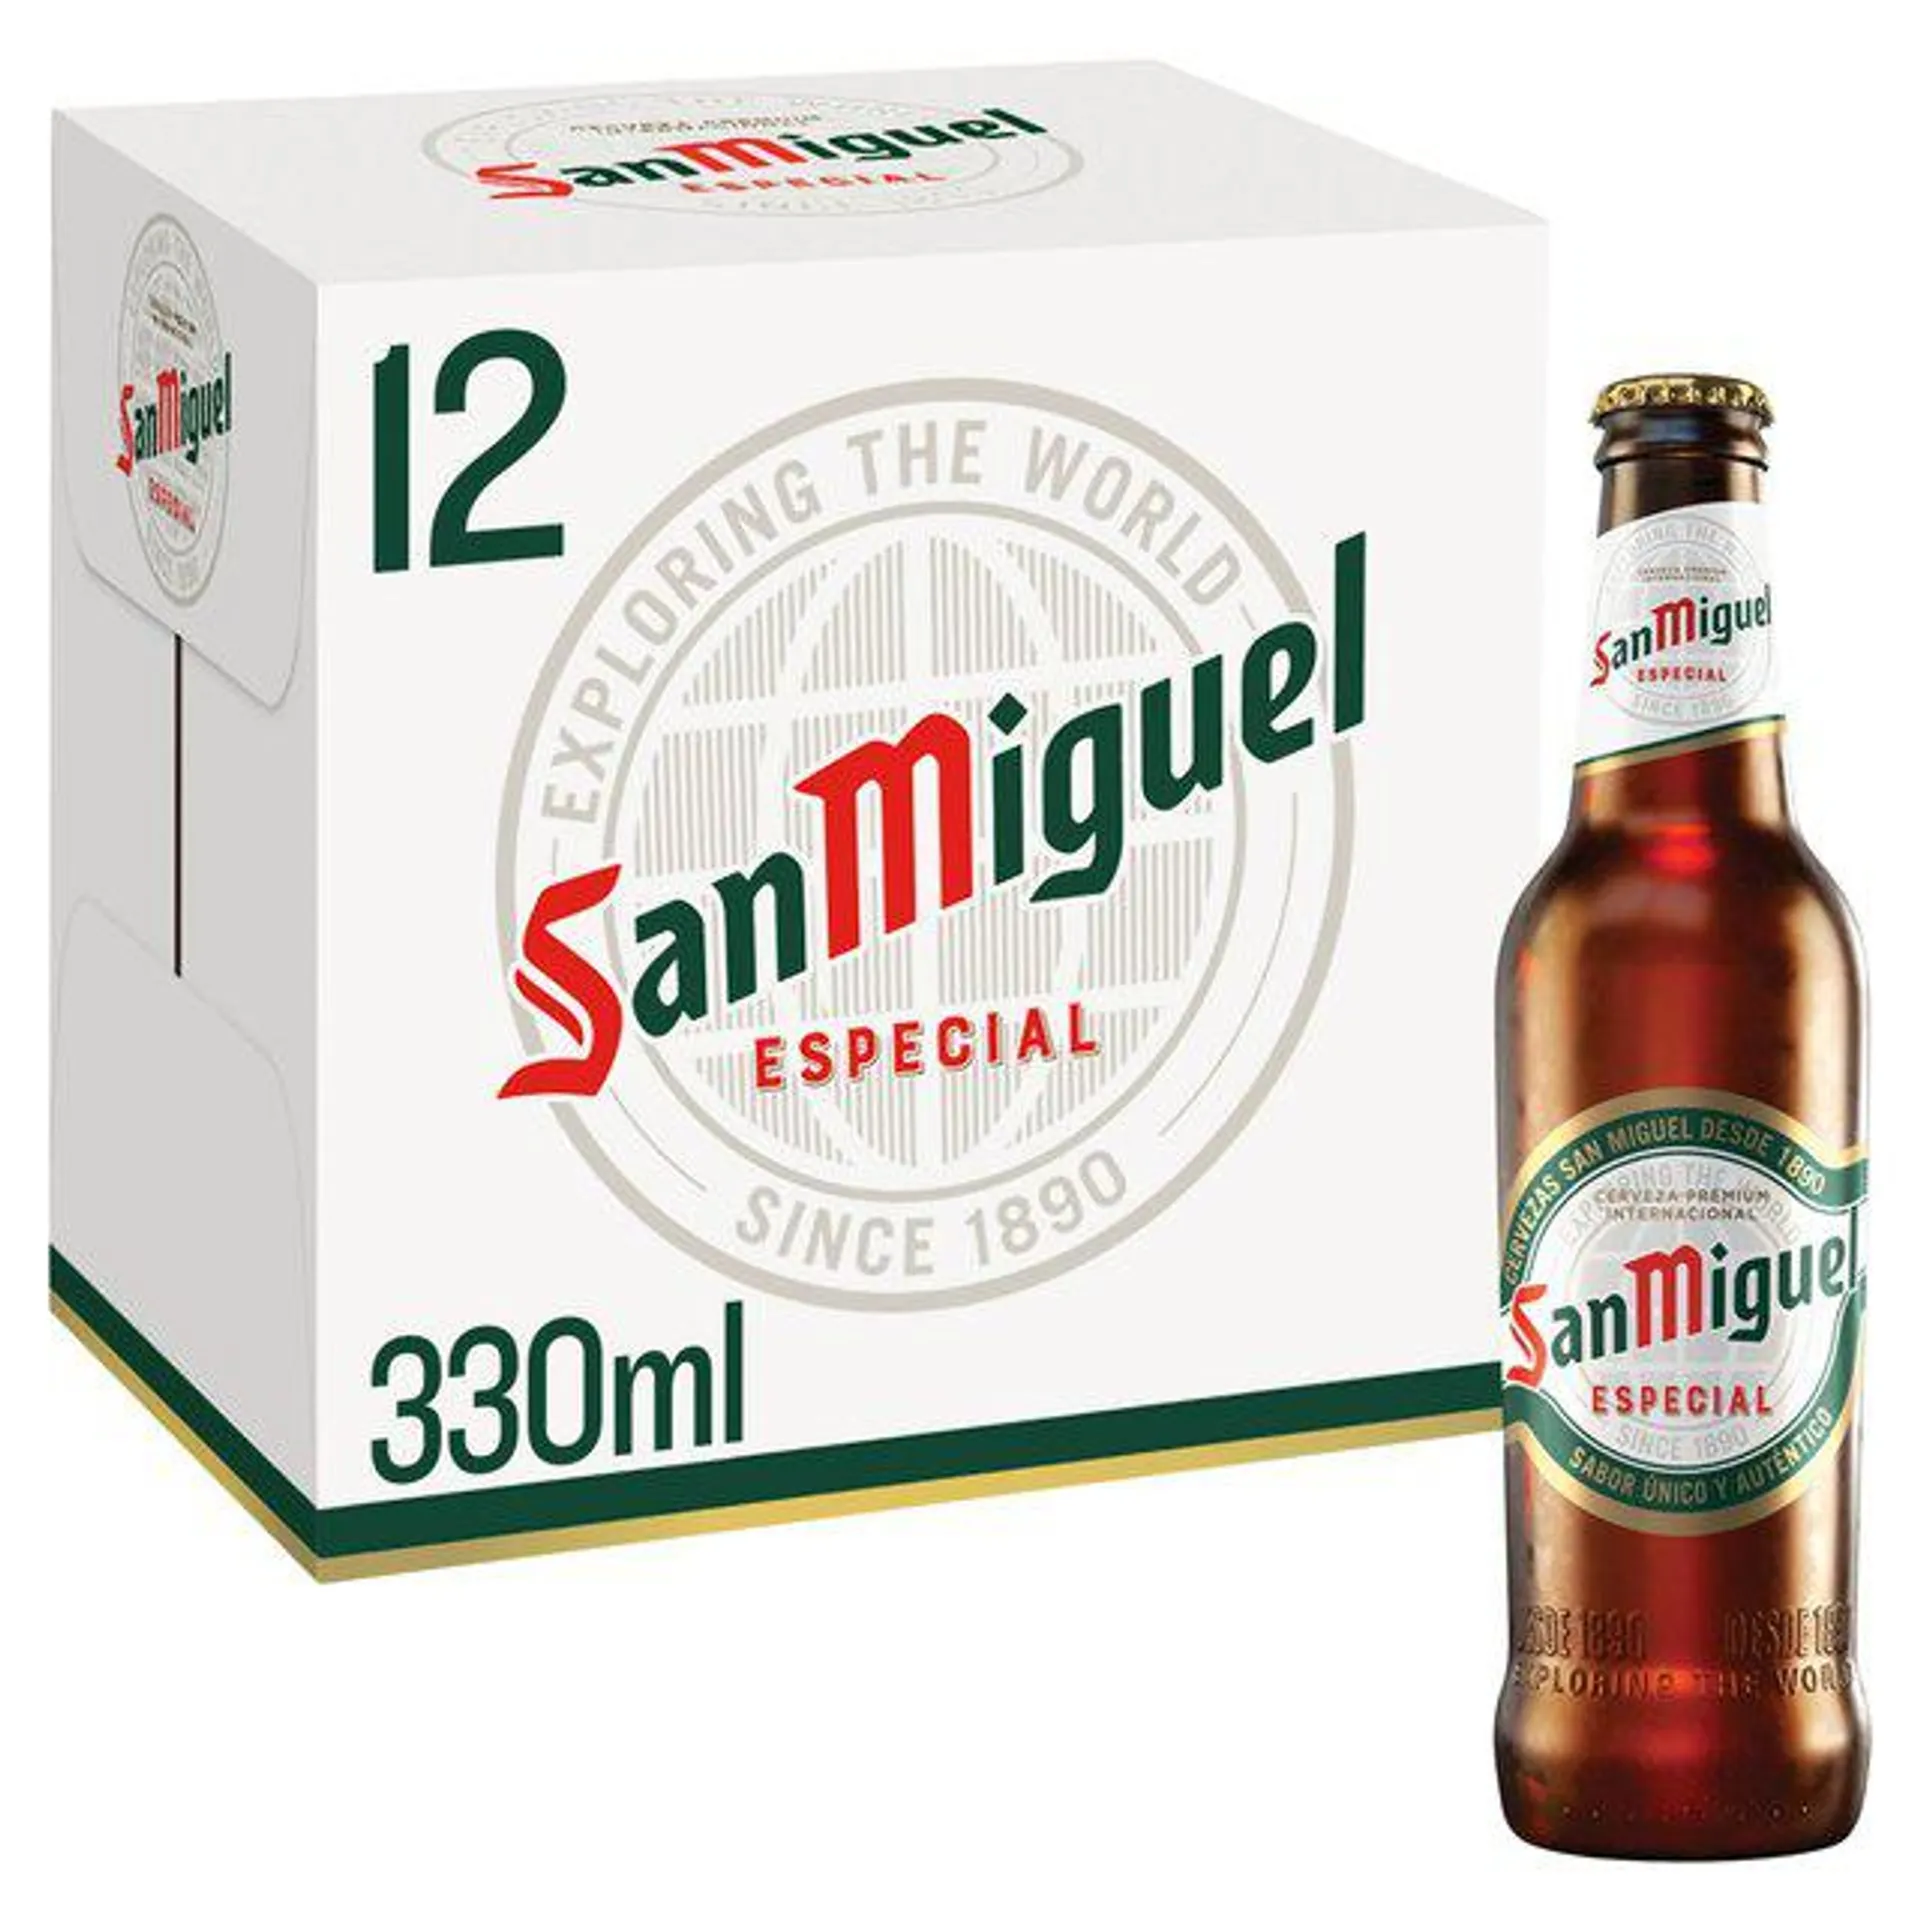 San Miguel Premium Lager Beer Bottles 12 x 330ml